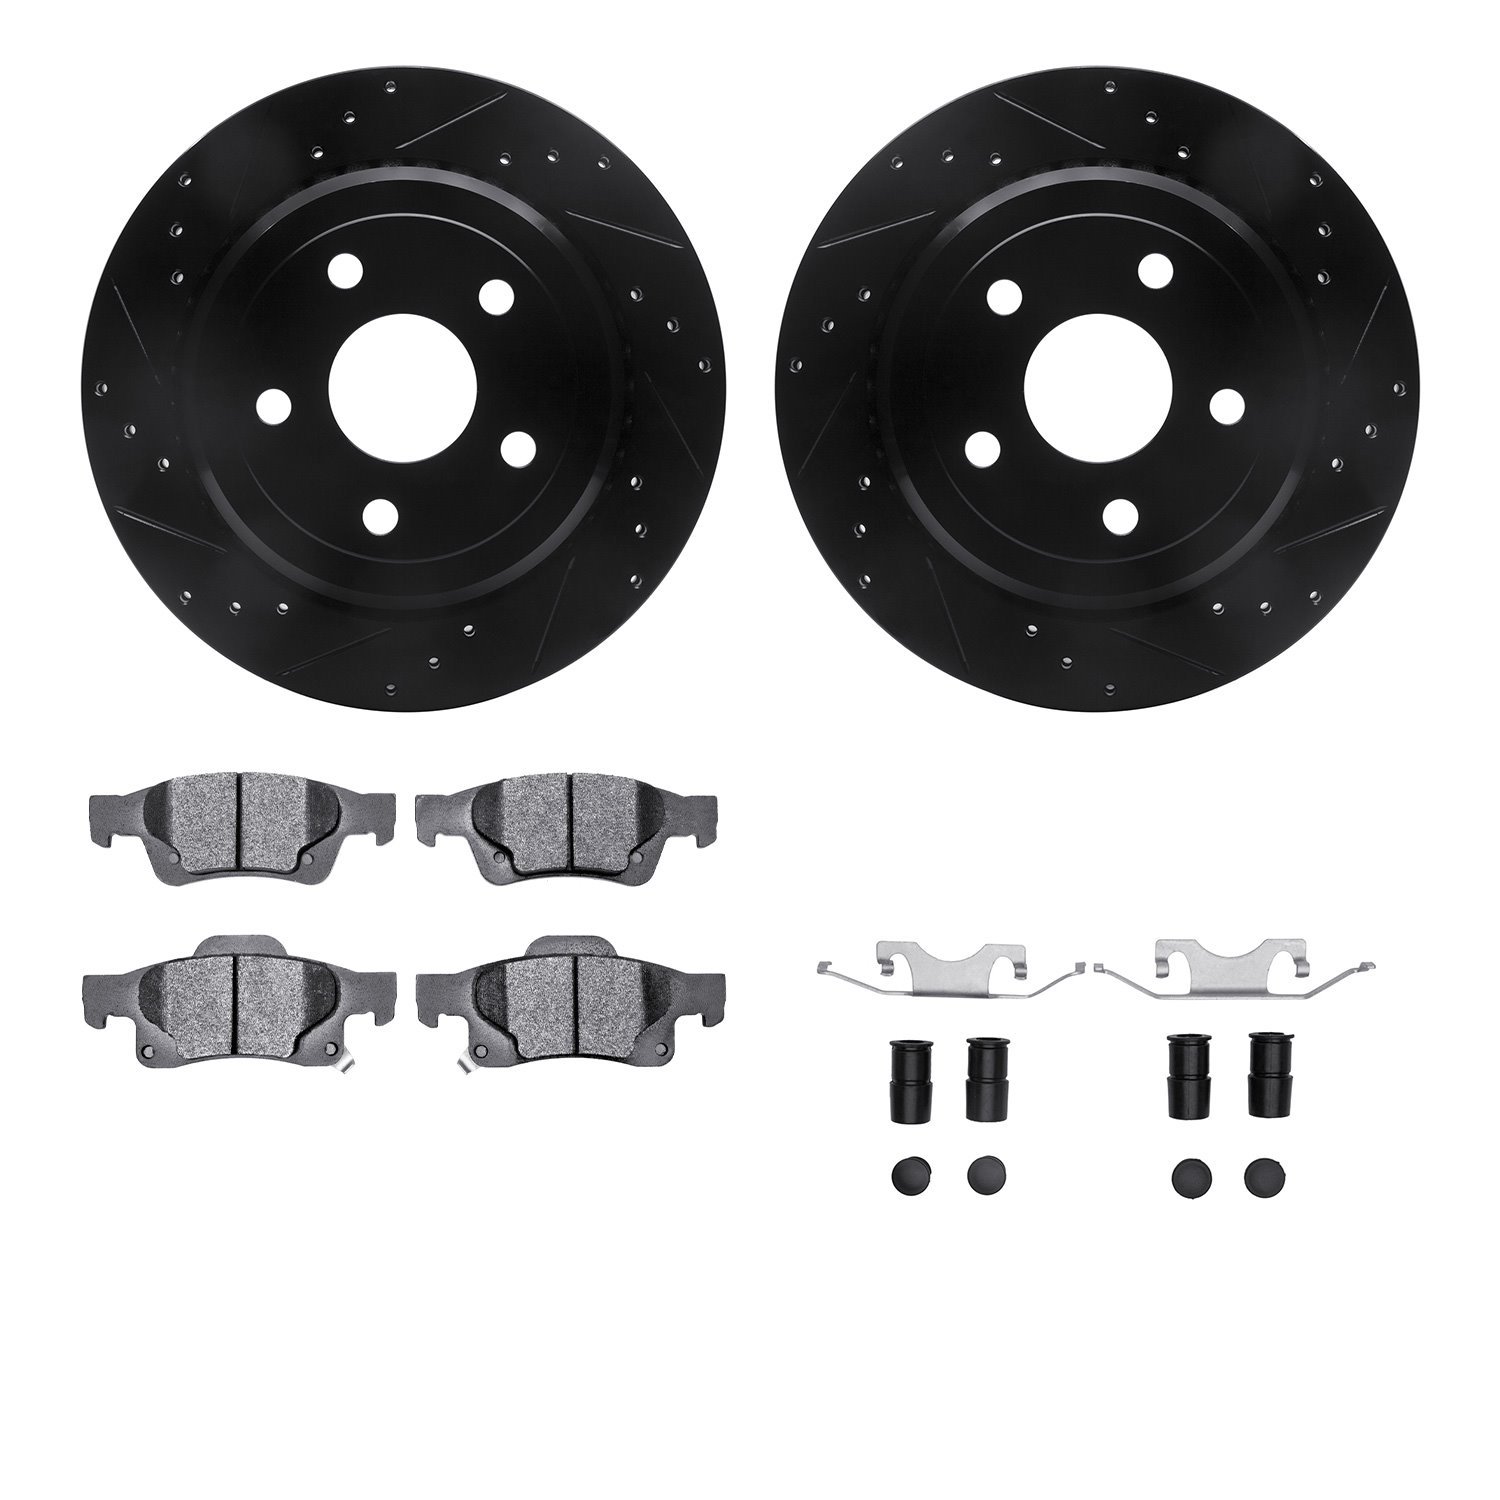 8312-42038 Drilled/Slotted Brake Rotors with 3000-Series Ceramic Brake Pads Kit & Hardware [Black], Fits Select Mopar, Position: